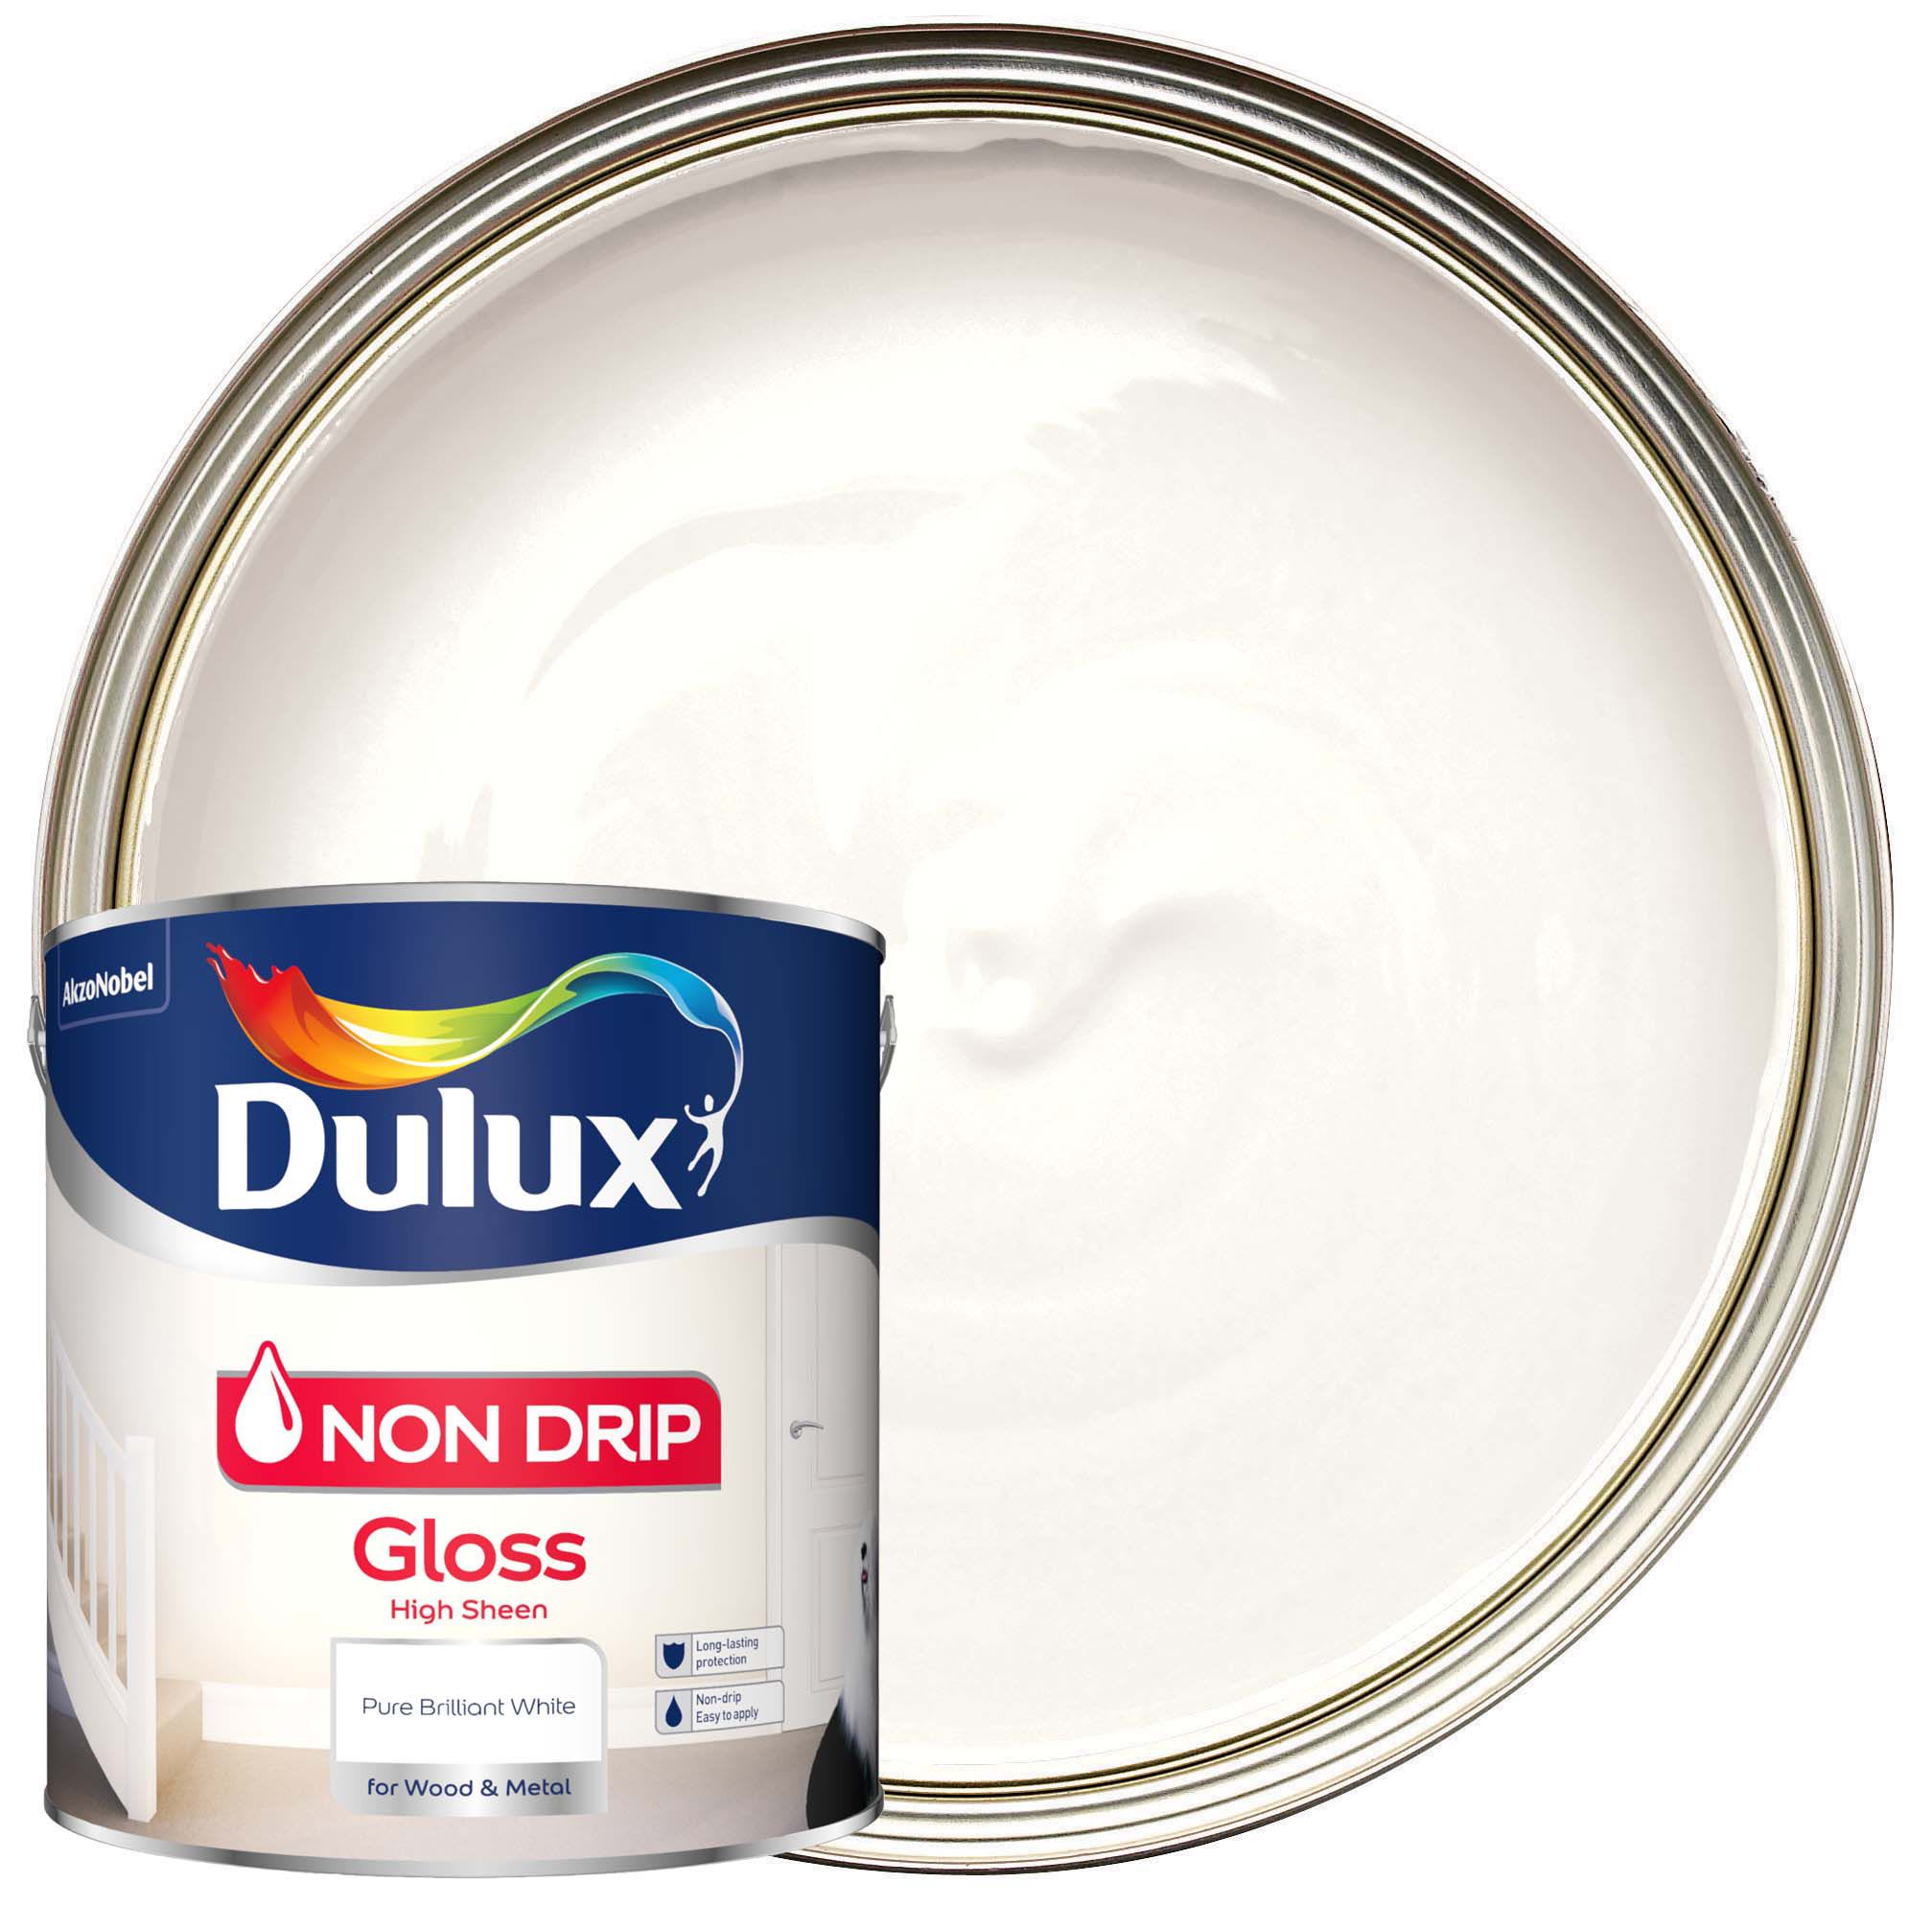 Dulux Non Drip Gloss Paint - Pure Brilliant